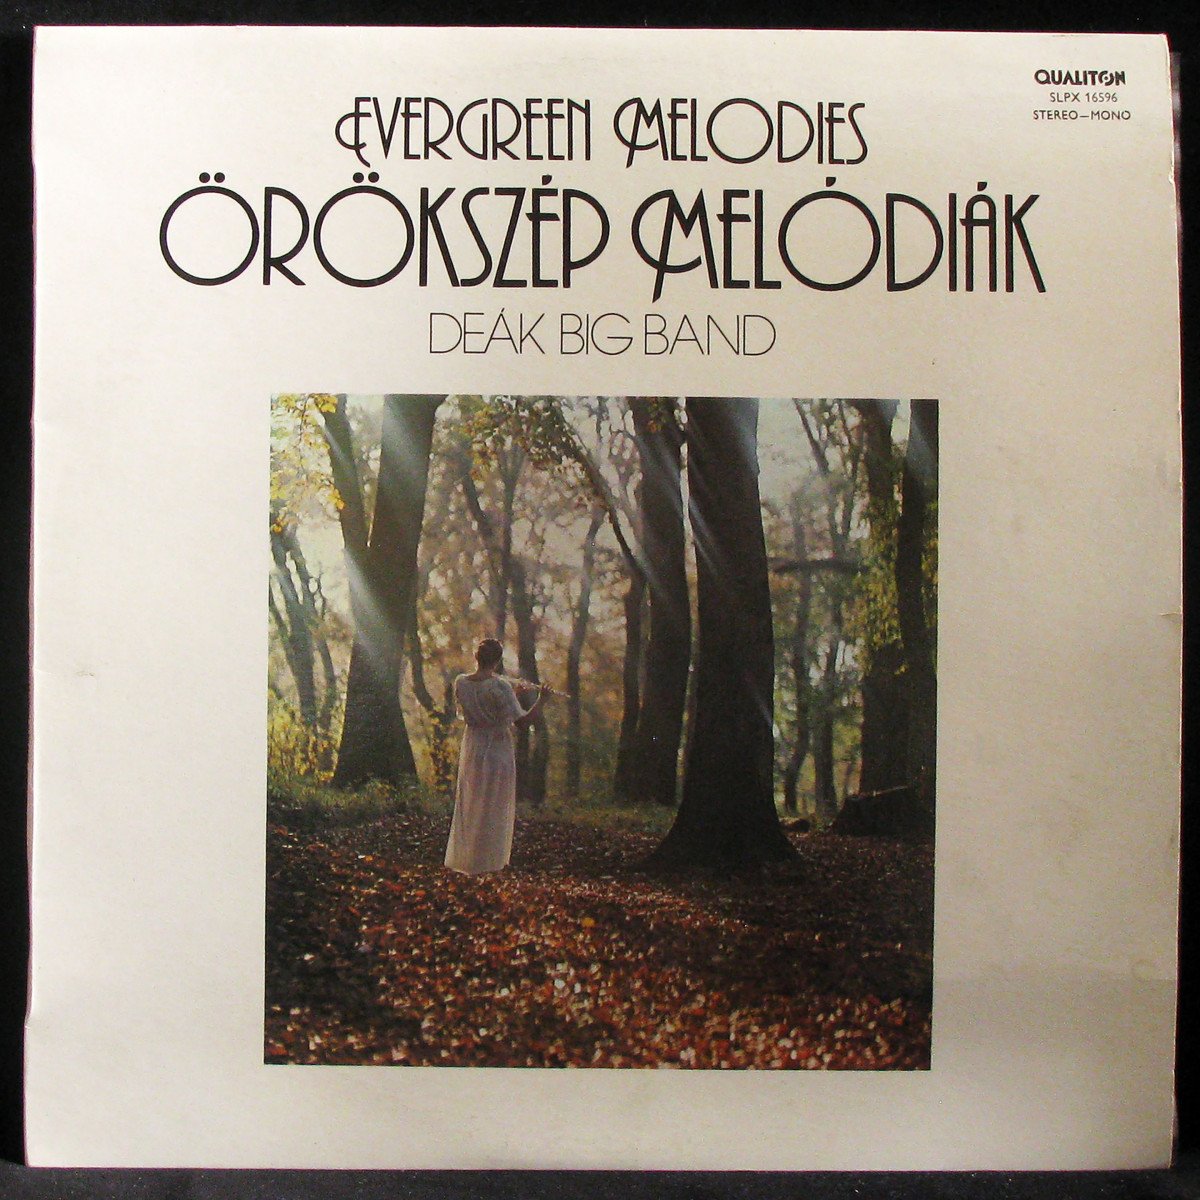 Orokszep Melodiak (Evergreen Melodies)